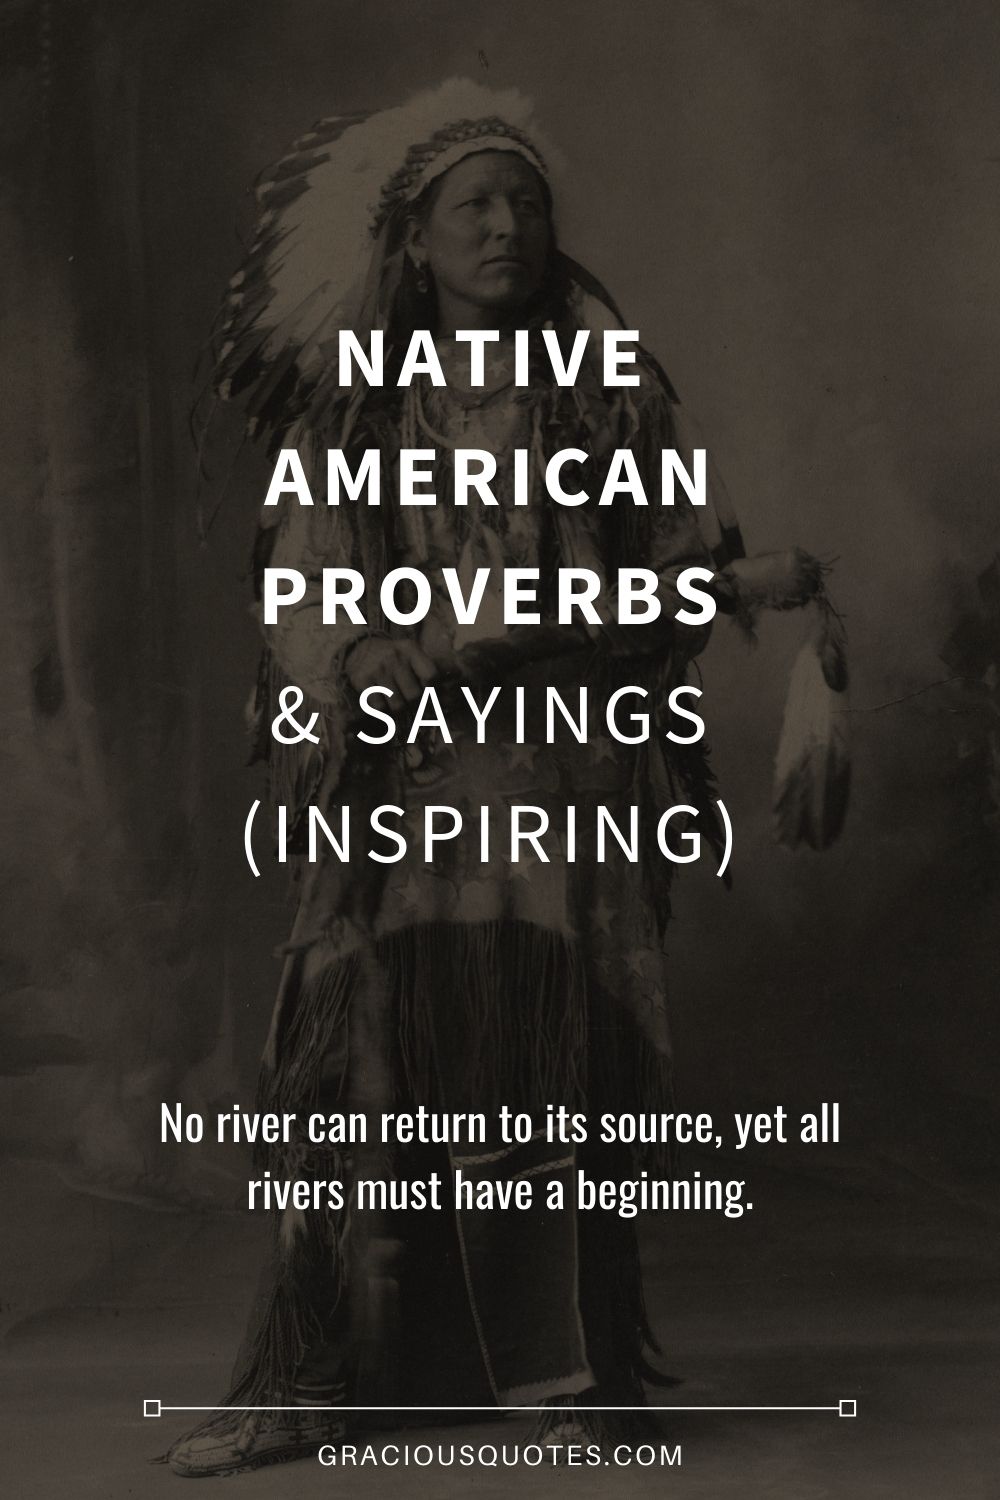 Native American Proverbs & Sayings (INSPIRING) - Gracious Quotes